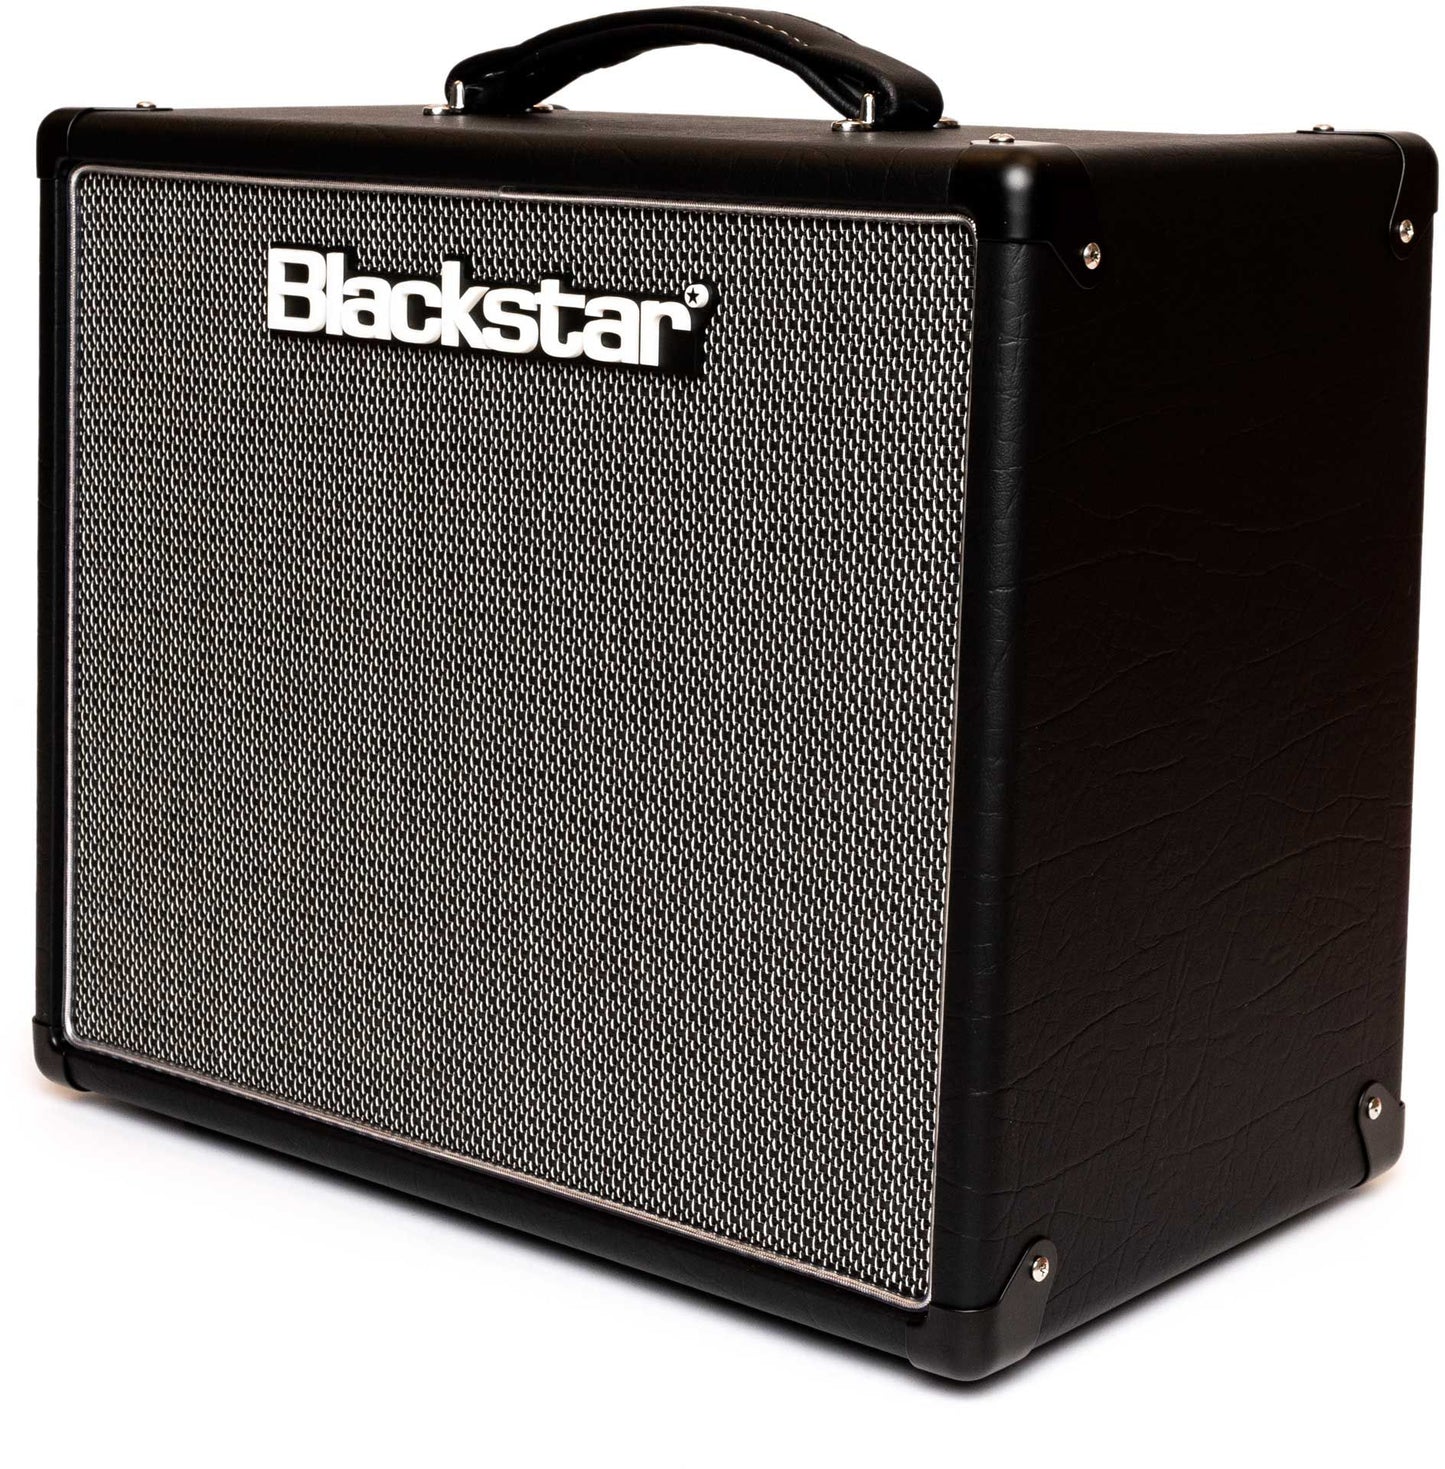 Blackstar HT-5R MKII 5-Watt 1x12" Combo Amplifier with Reverb